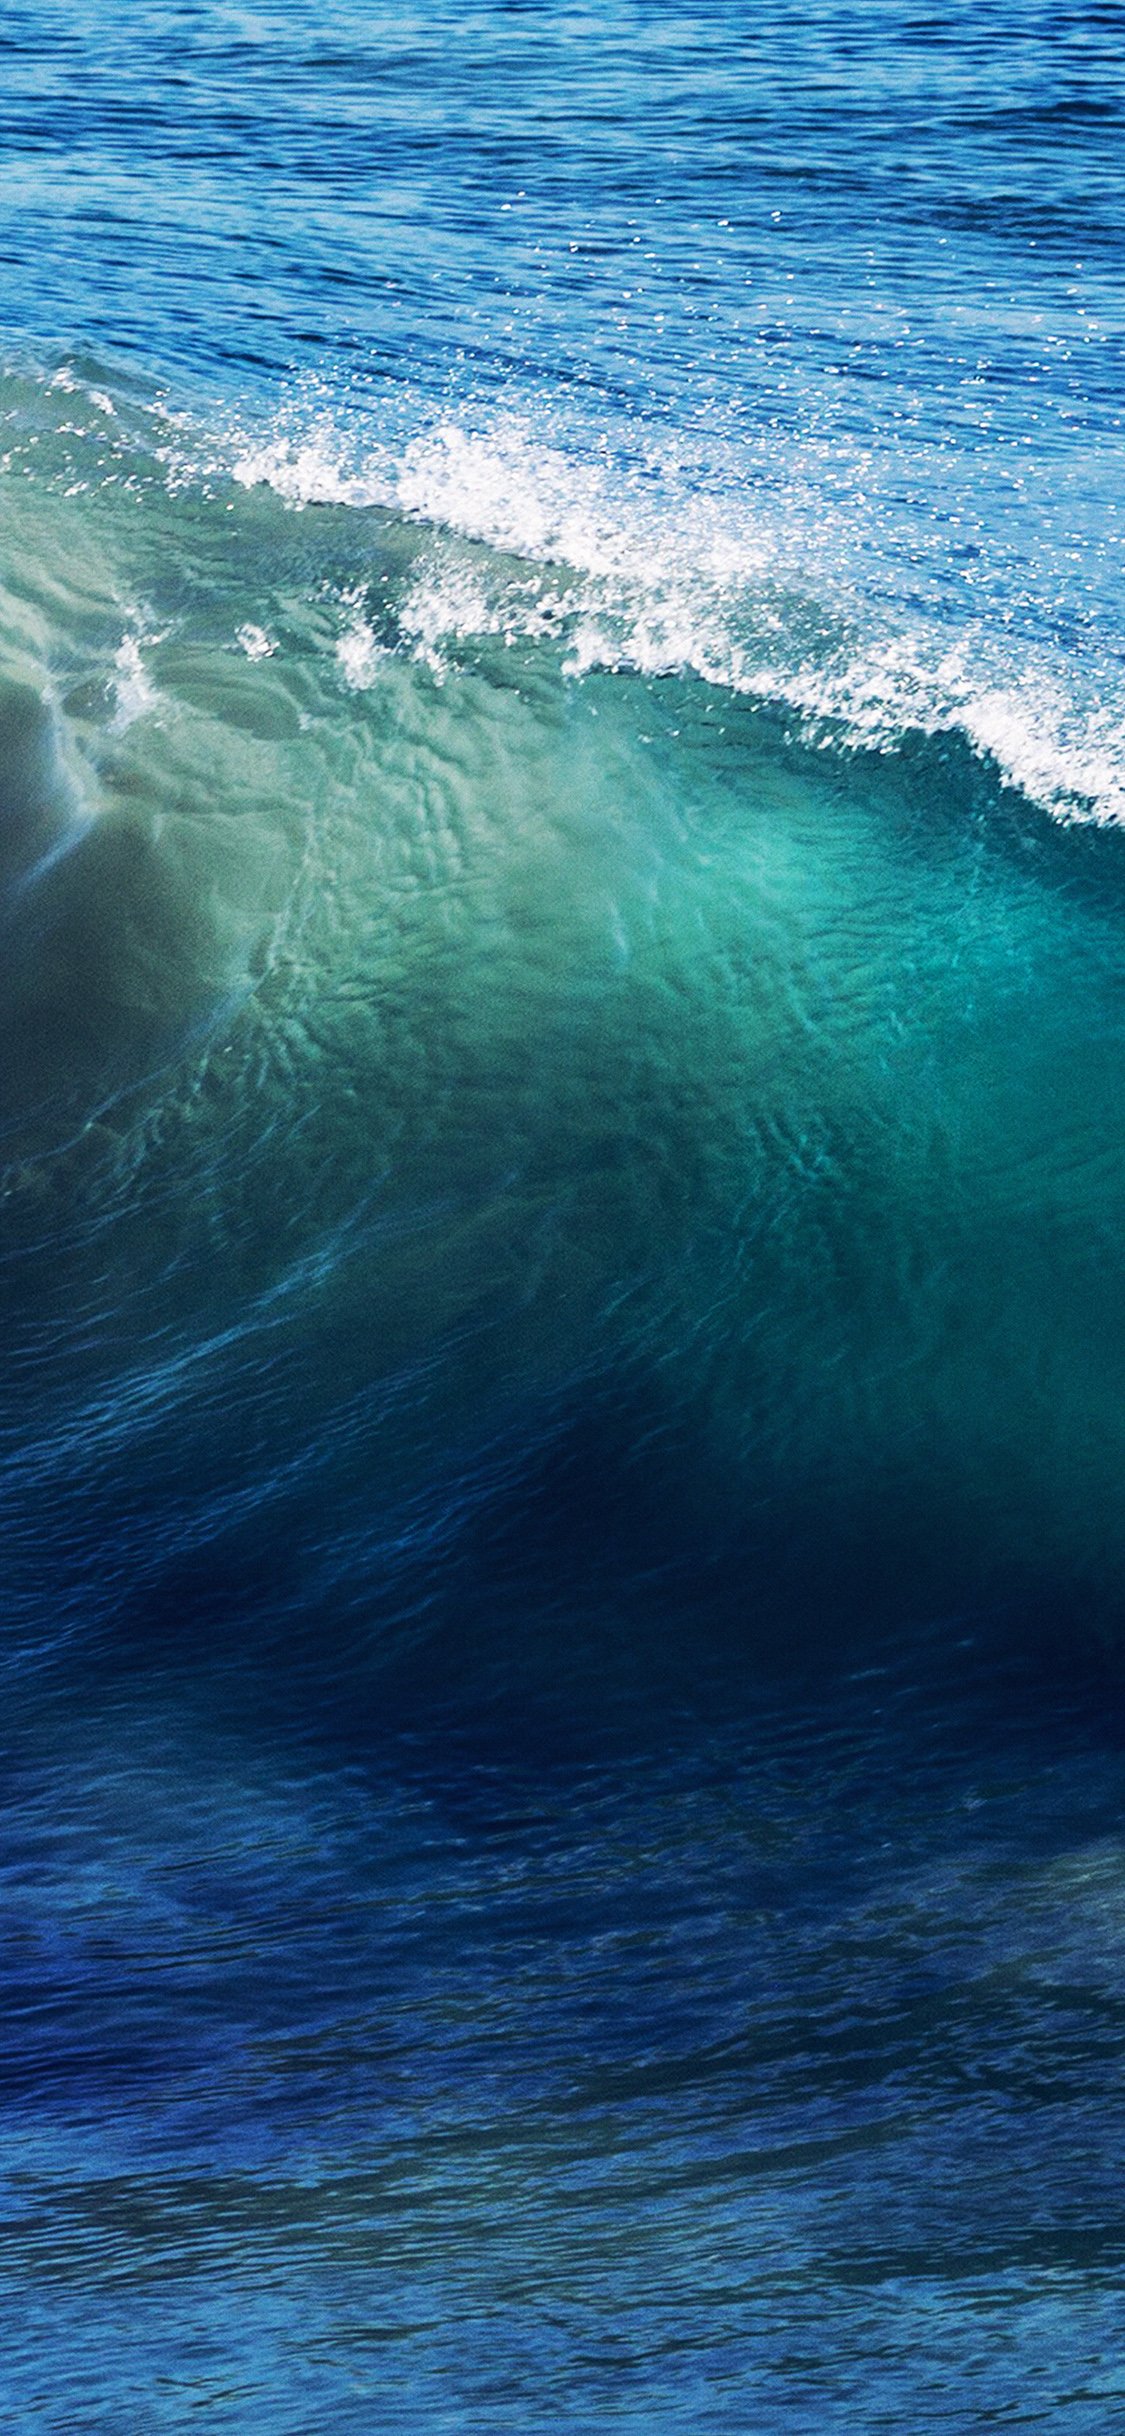 iPhone X wallpaper. wave sea ocean summer blue